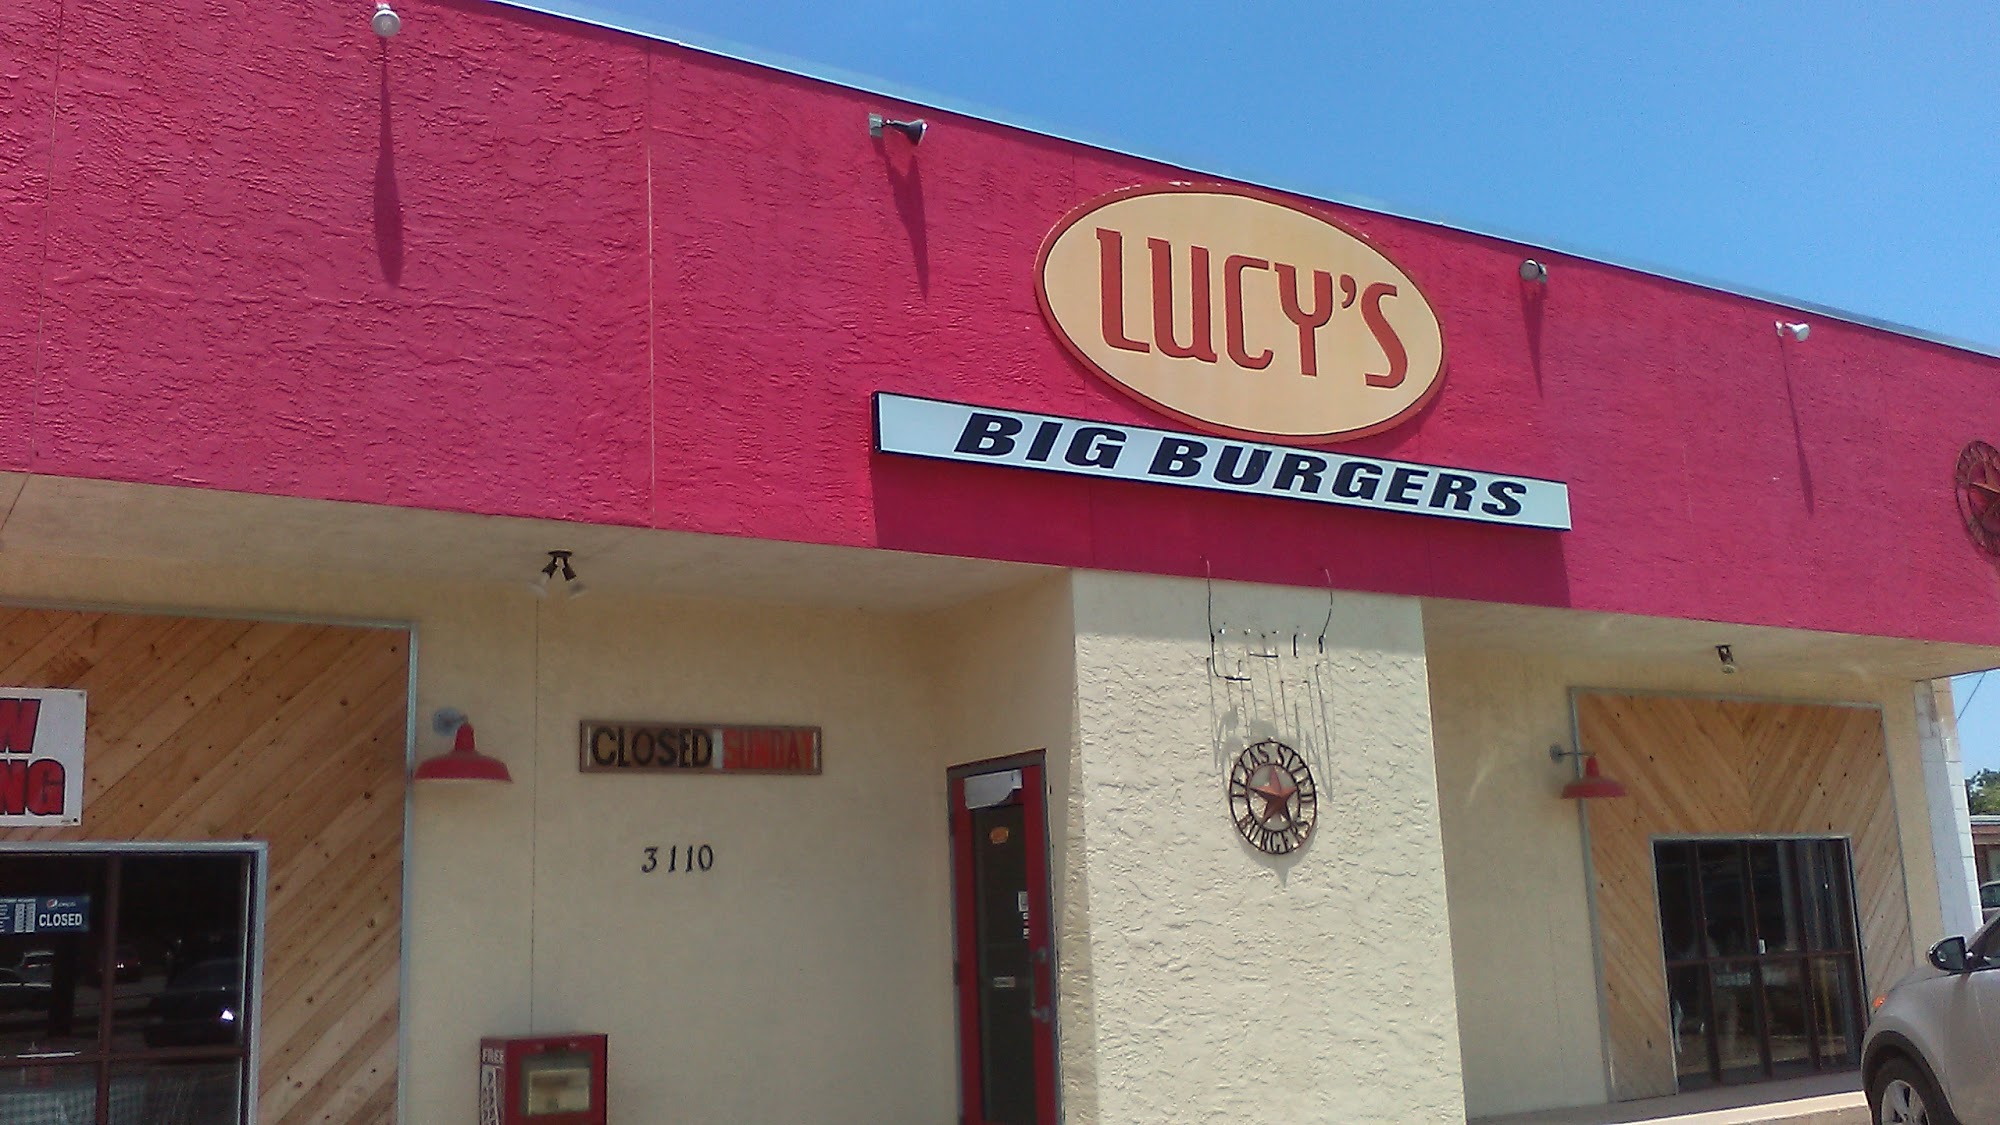 Lucy's Big Burgers